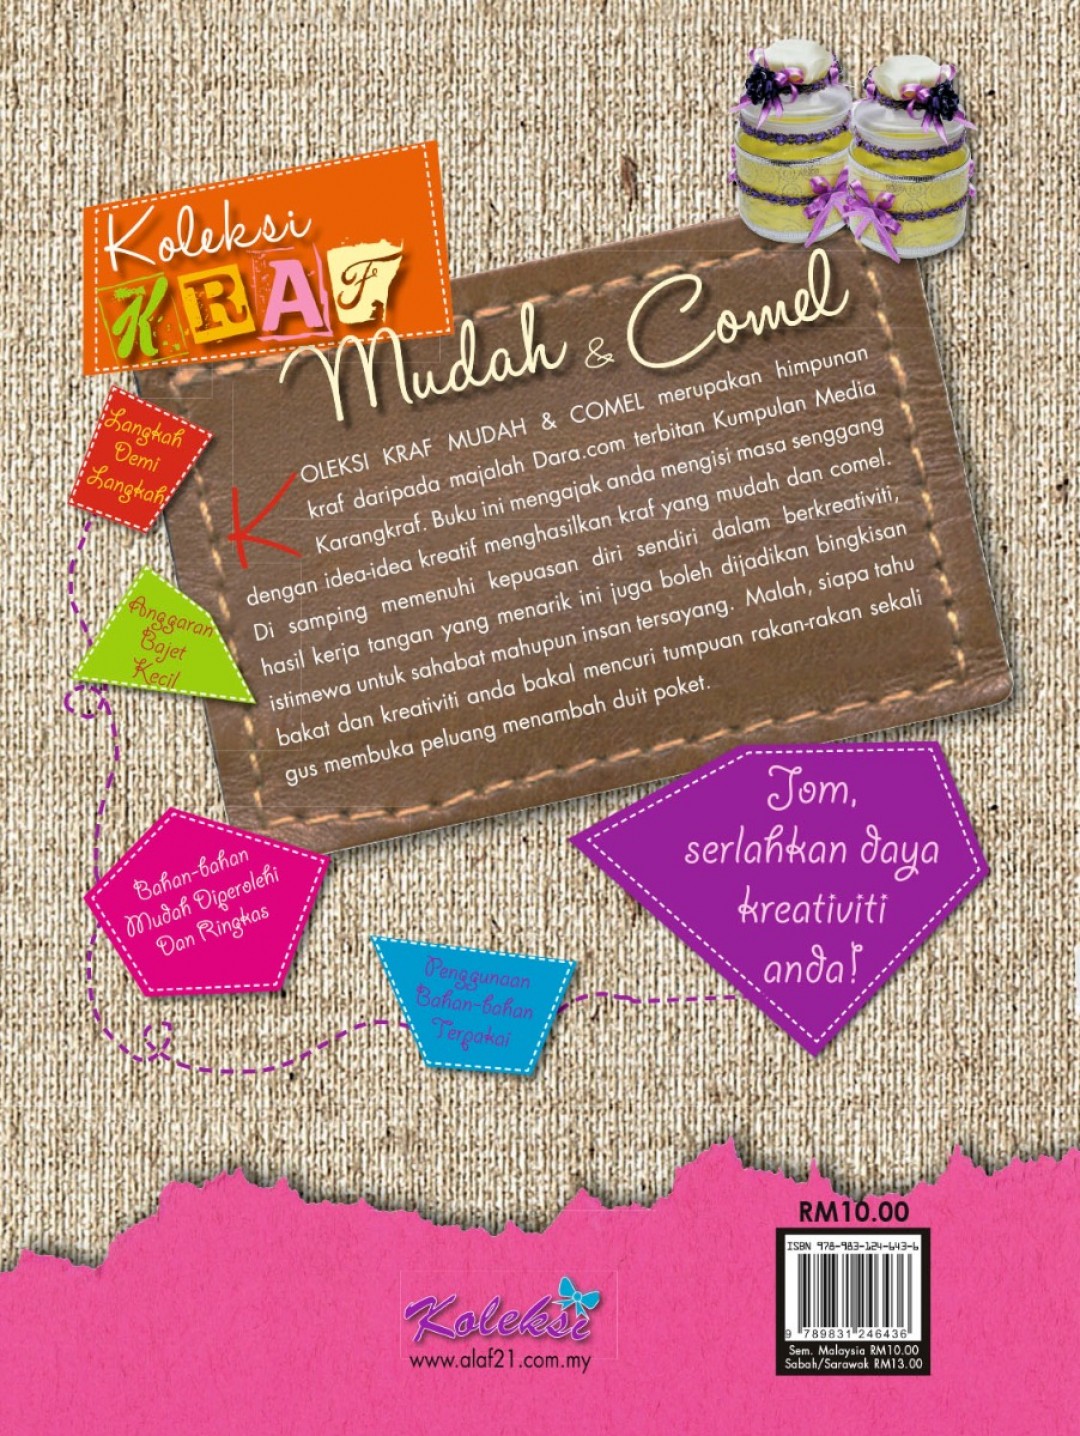 Koleksi Kraf Mudah & Comel